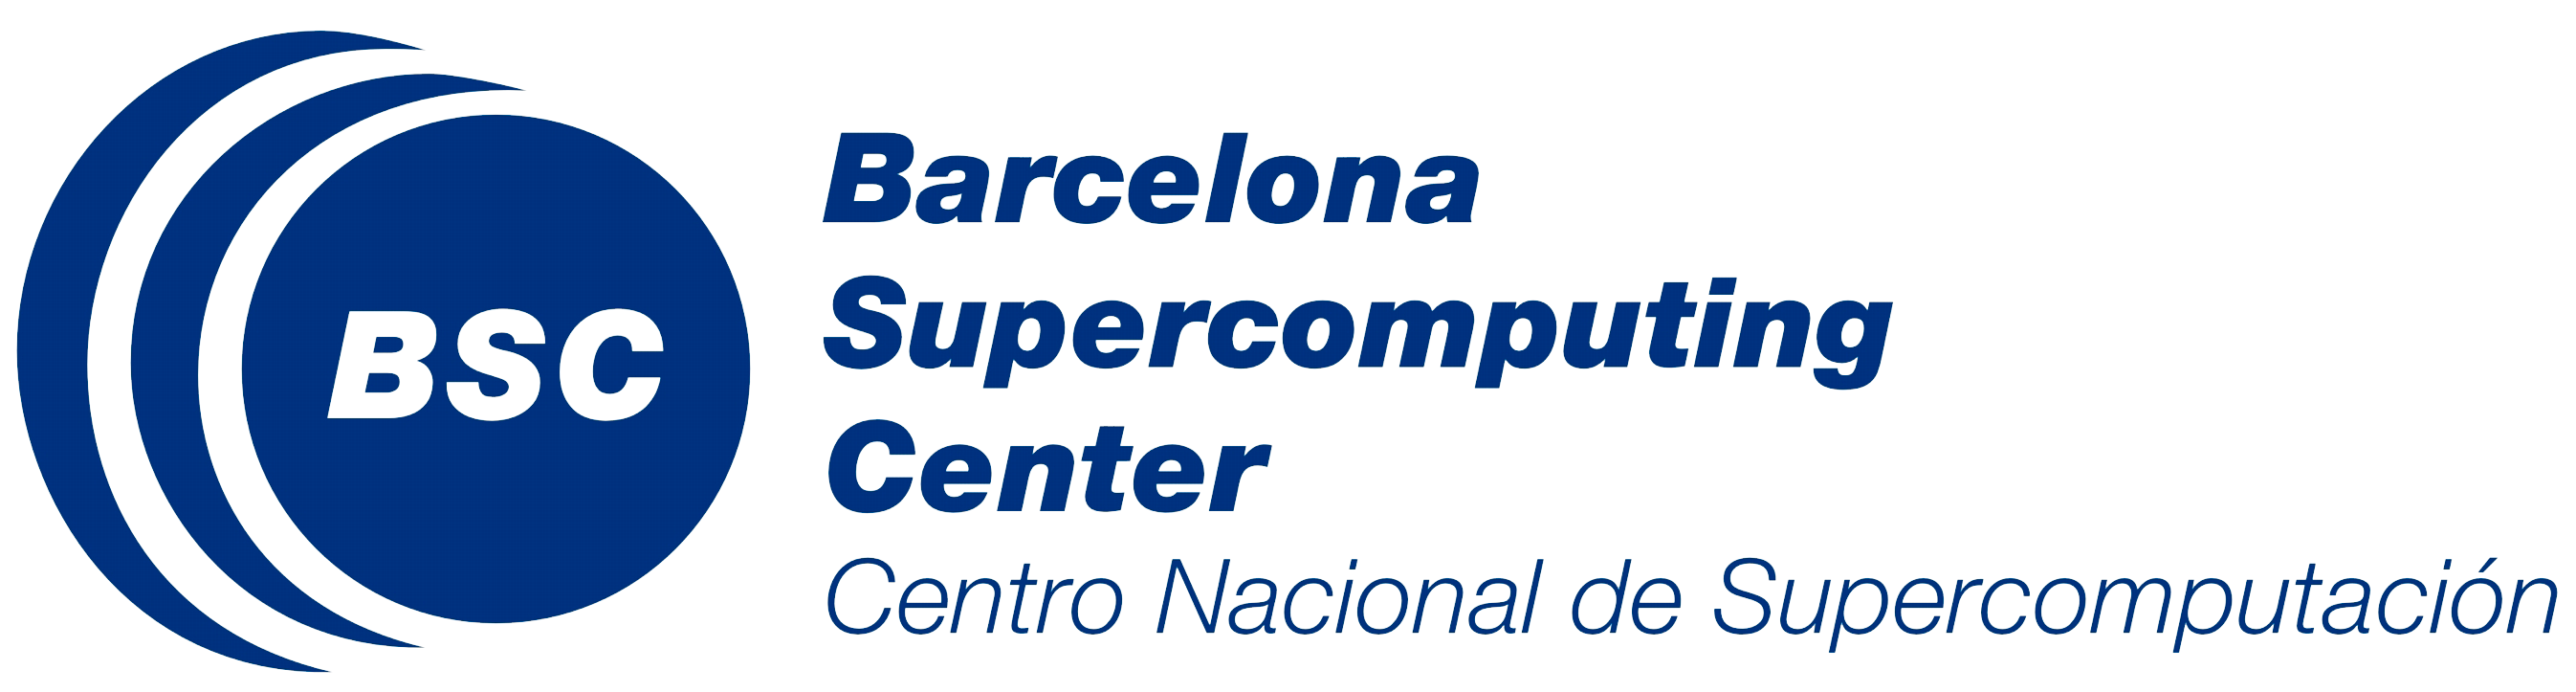 Esdeveniment: Open Day - Barcelona Supercomputing Center